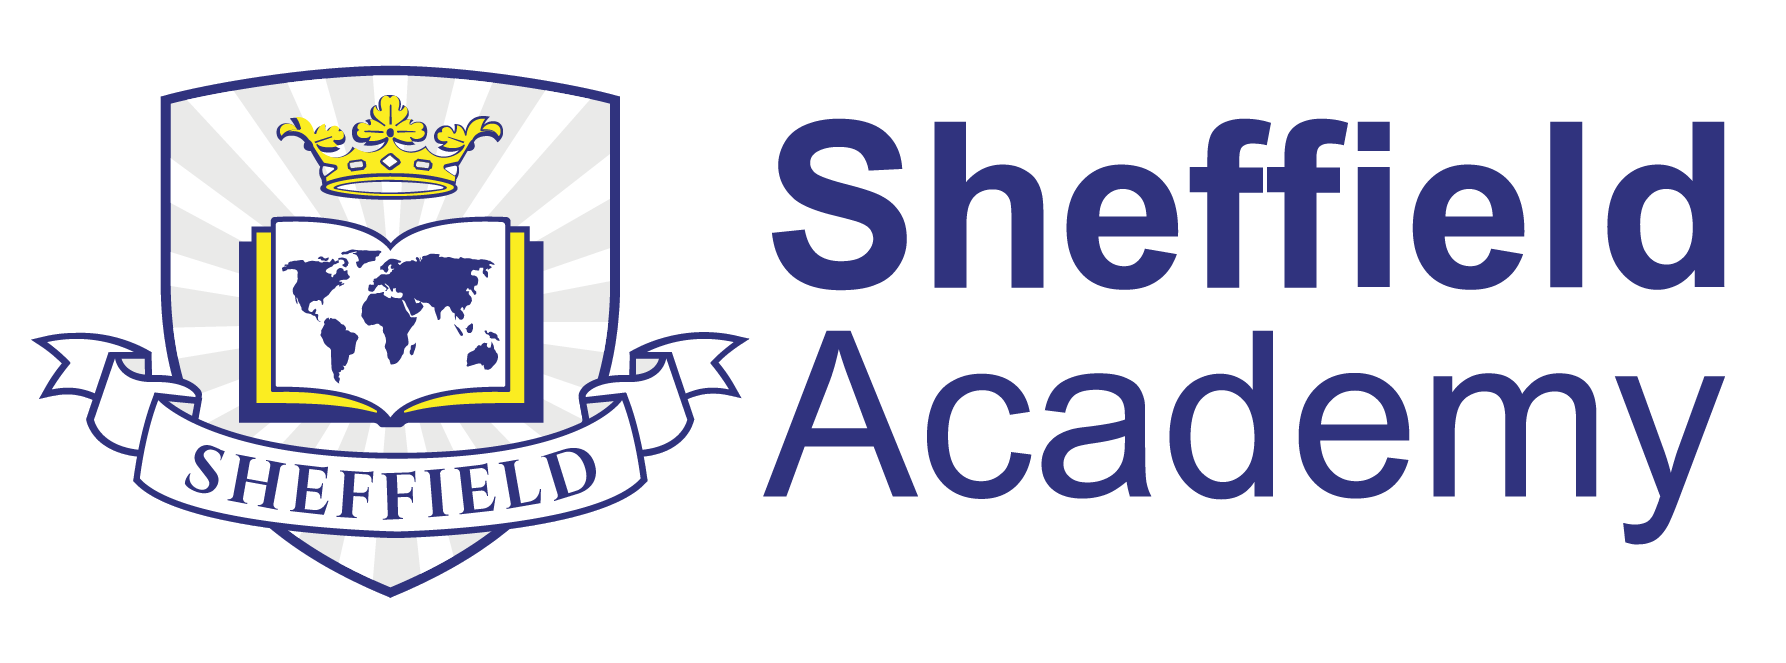 Sheffield Academy - Malaysia